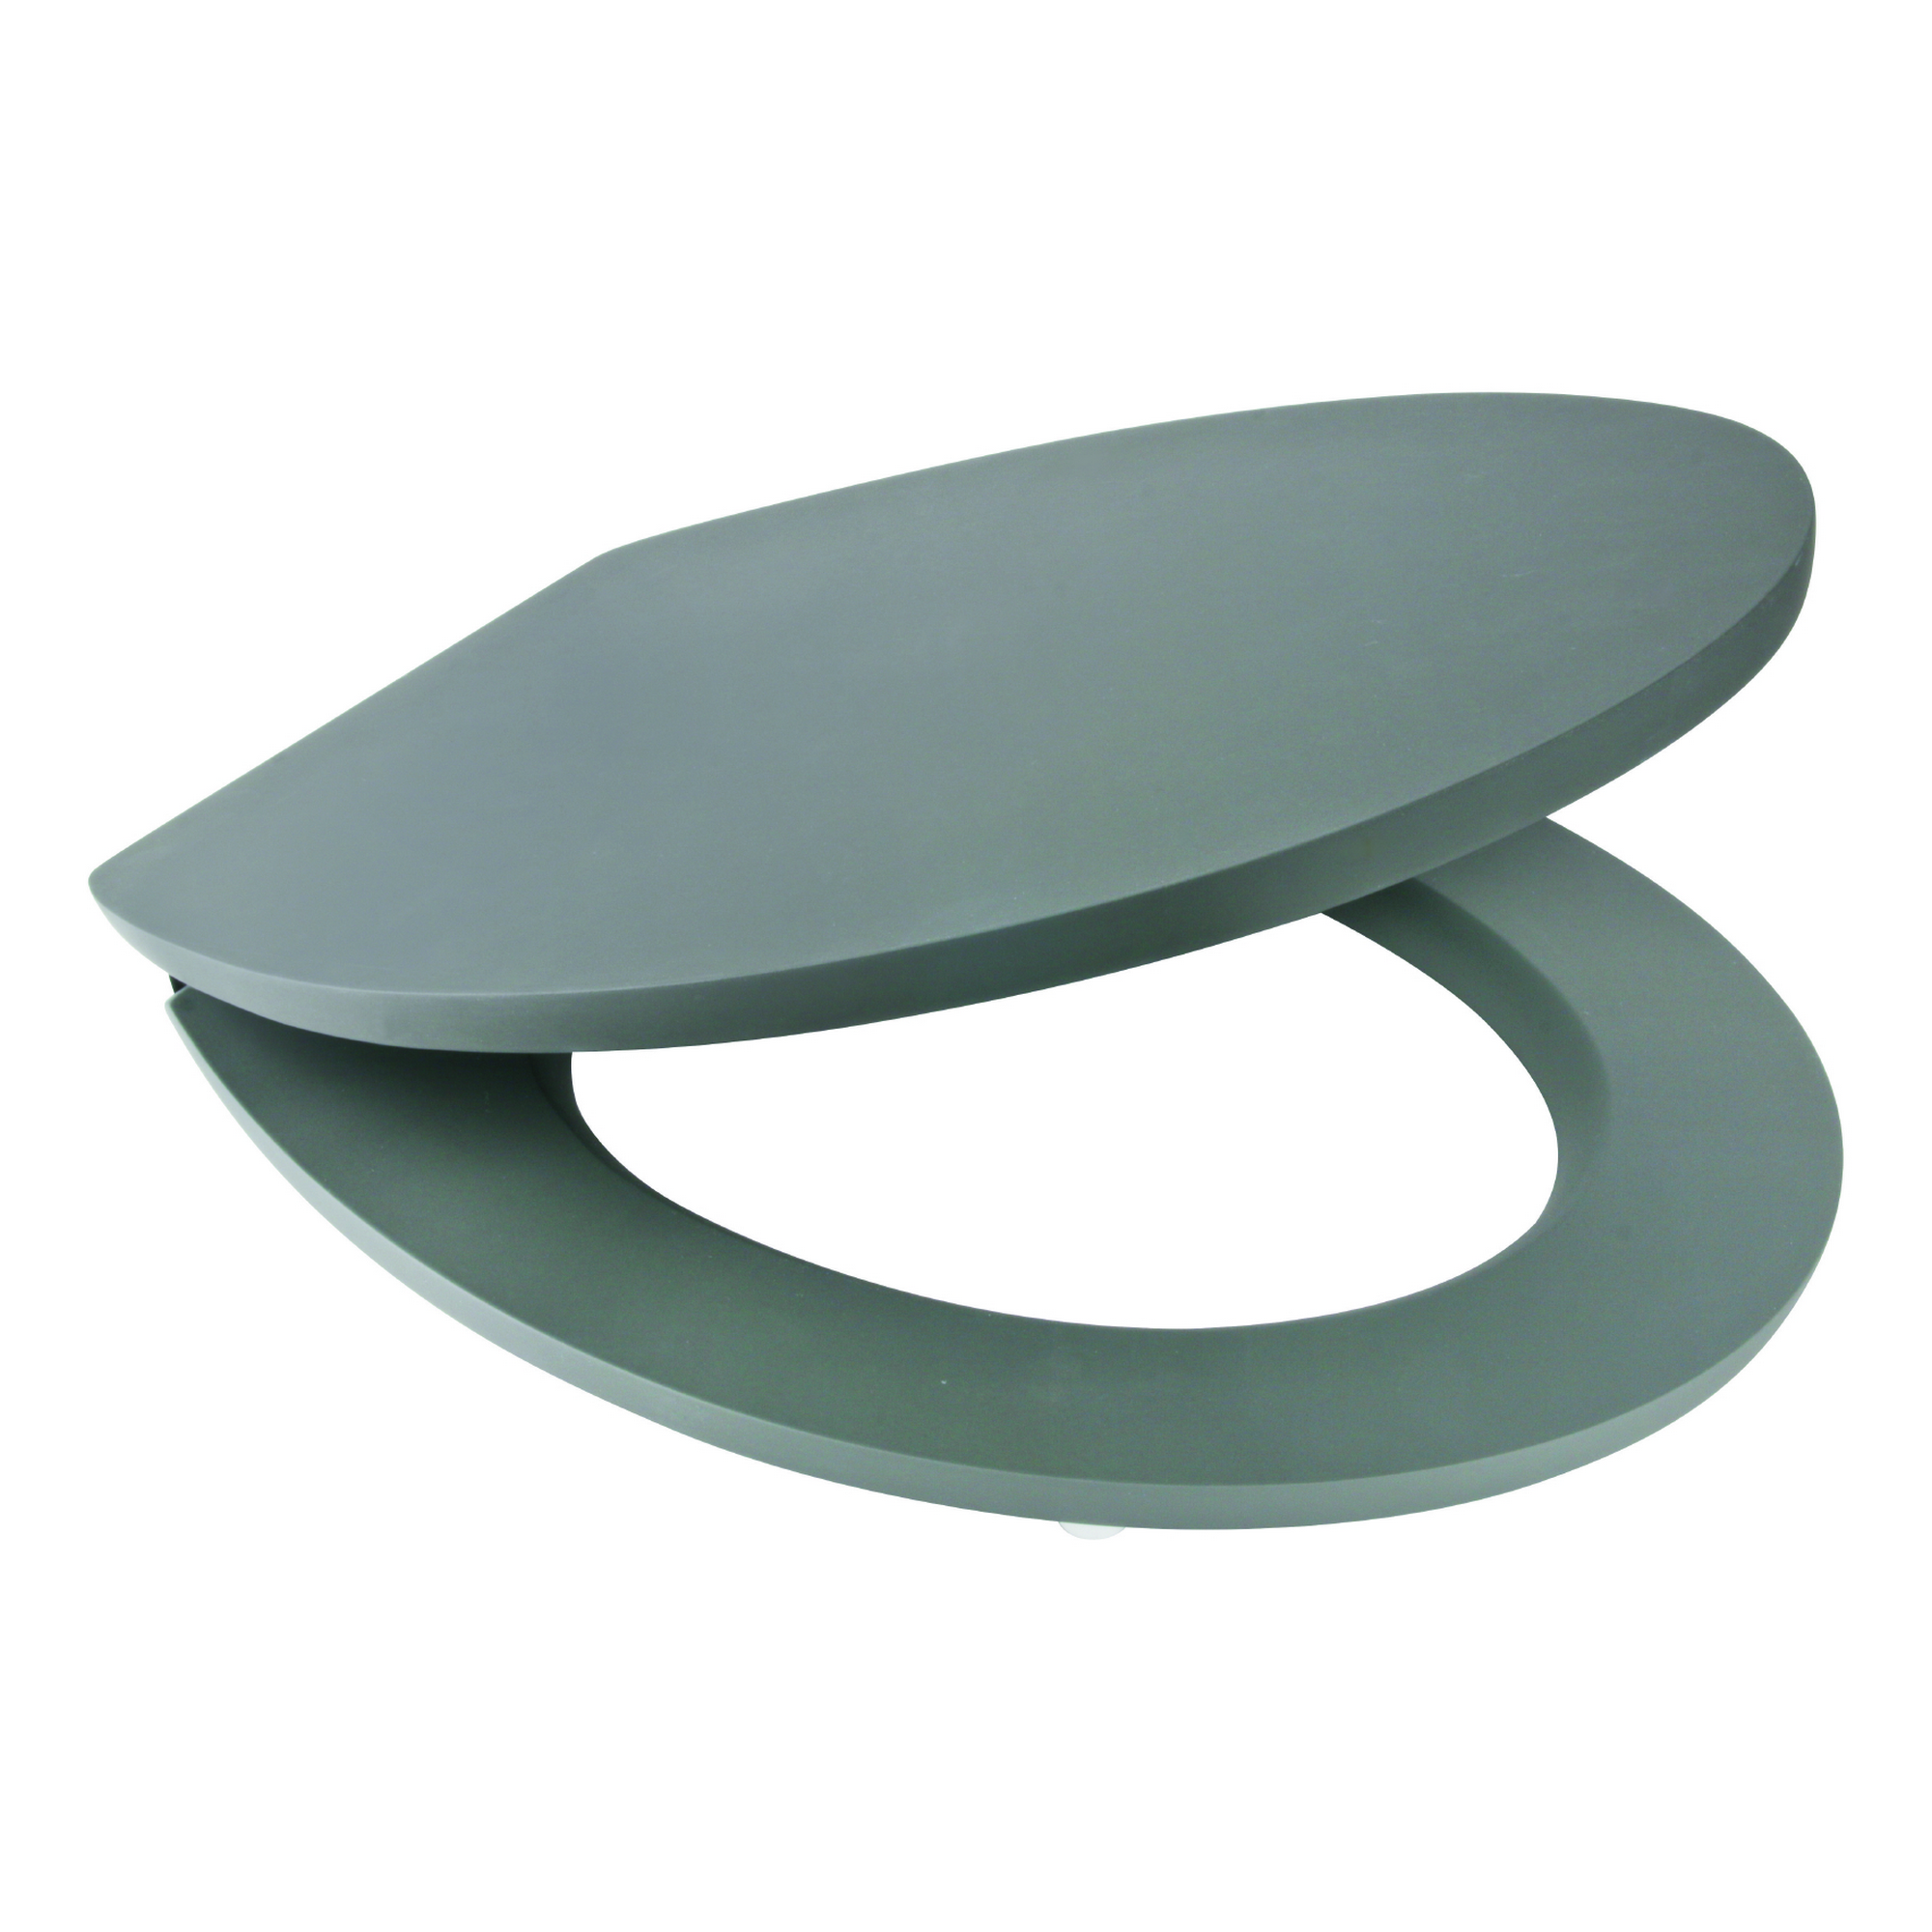 WC-Sitz 'Soft Touch' grau, mit Soft Touch Oberfläche + product picture